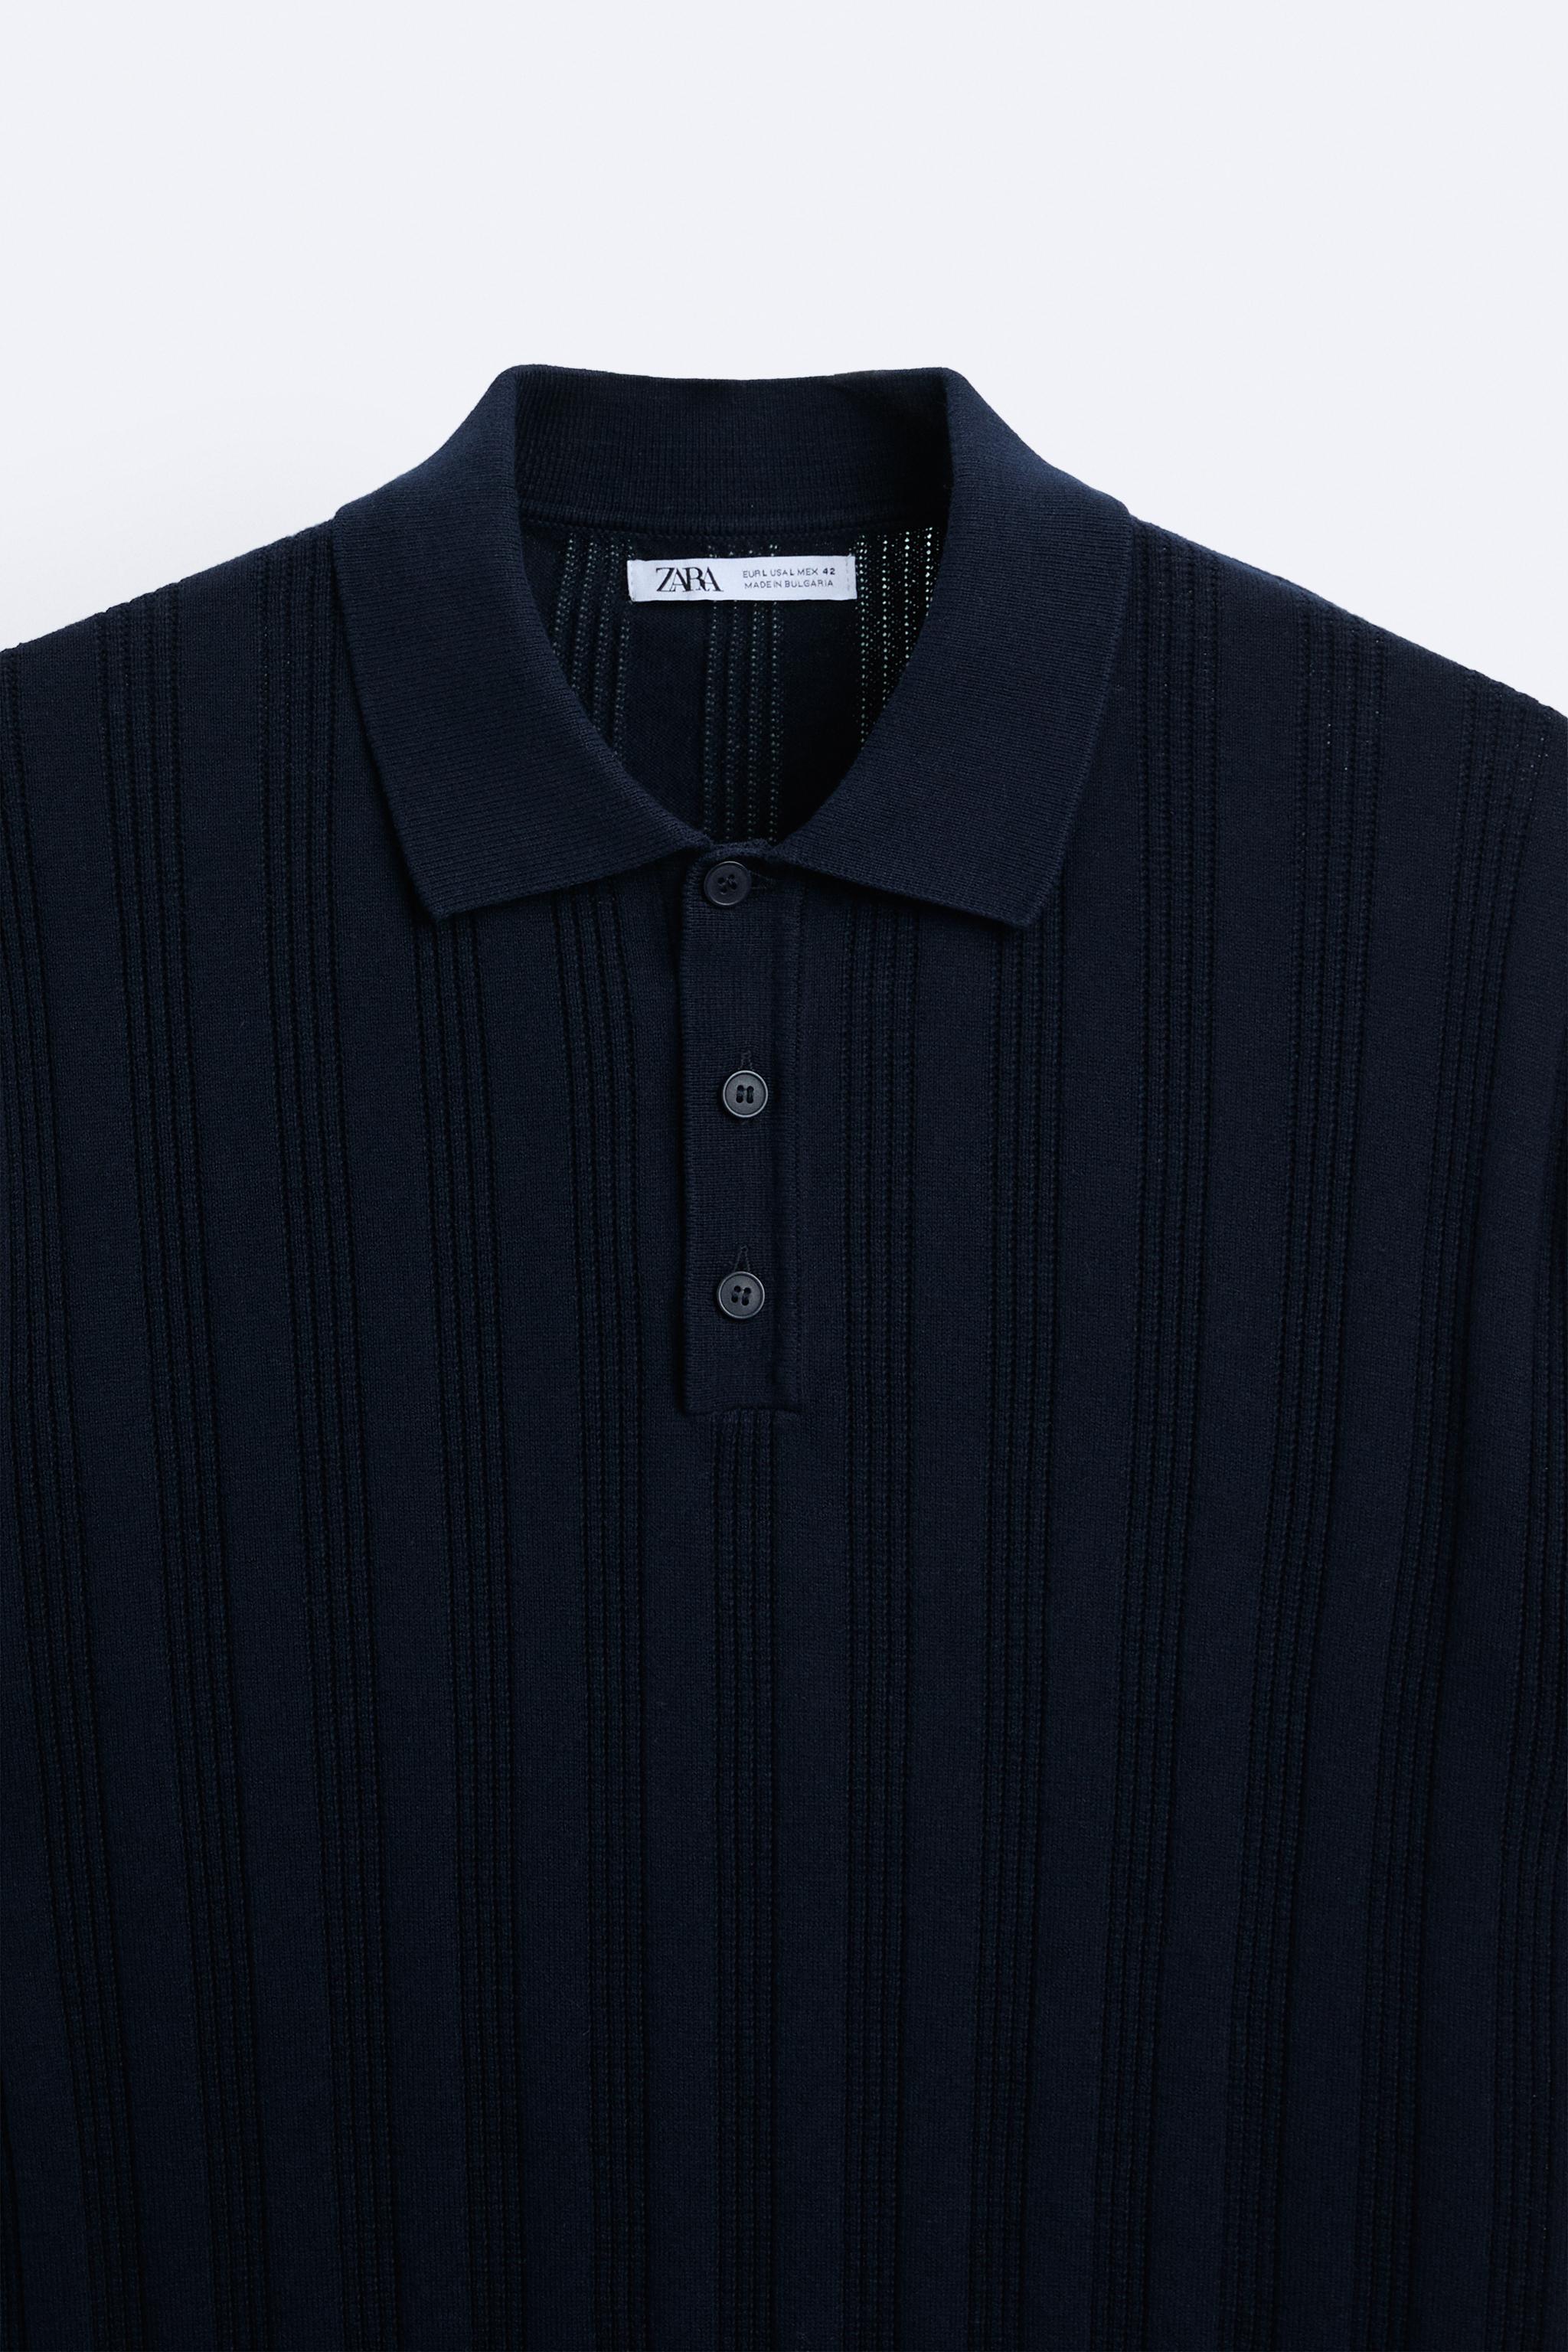 Zara Ribbed Knit Polo shirt Short sleeved white - Depop